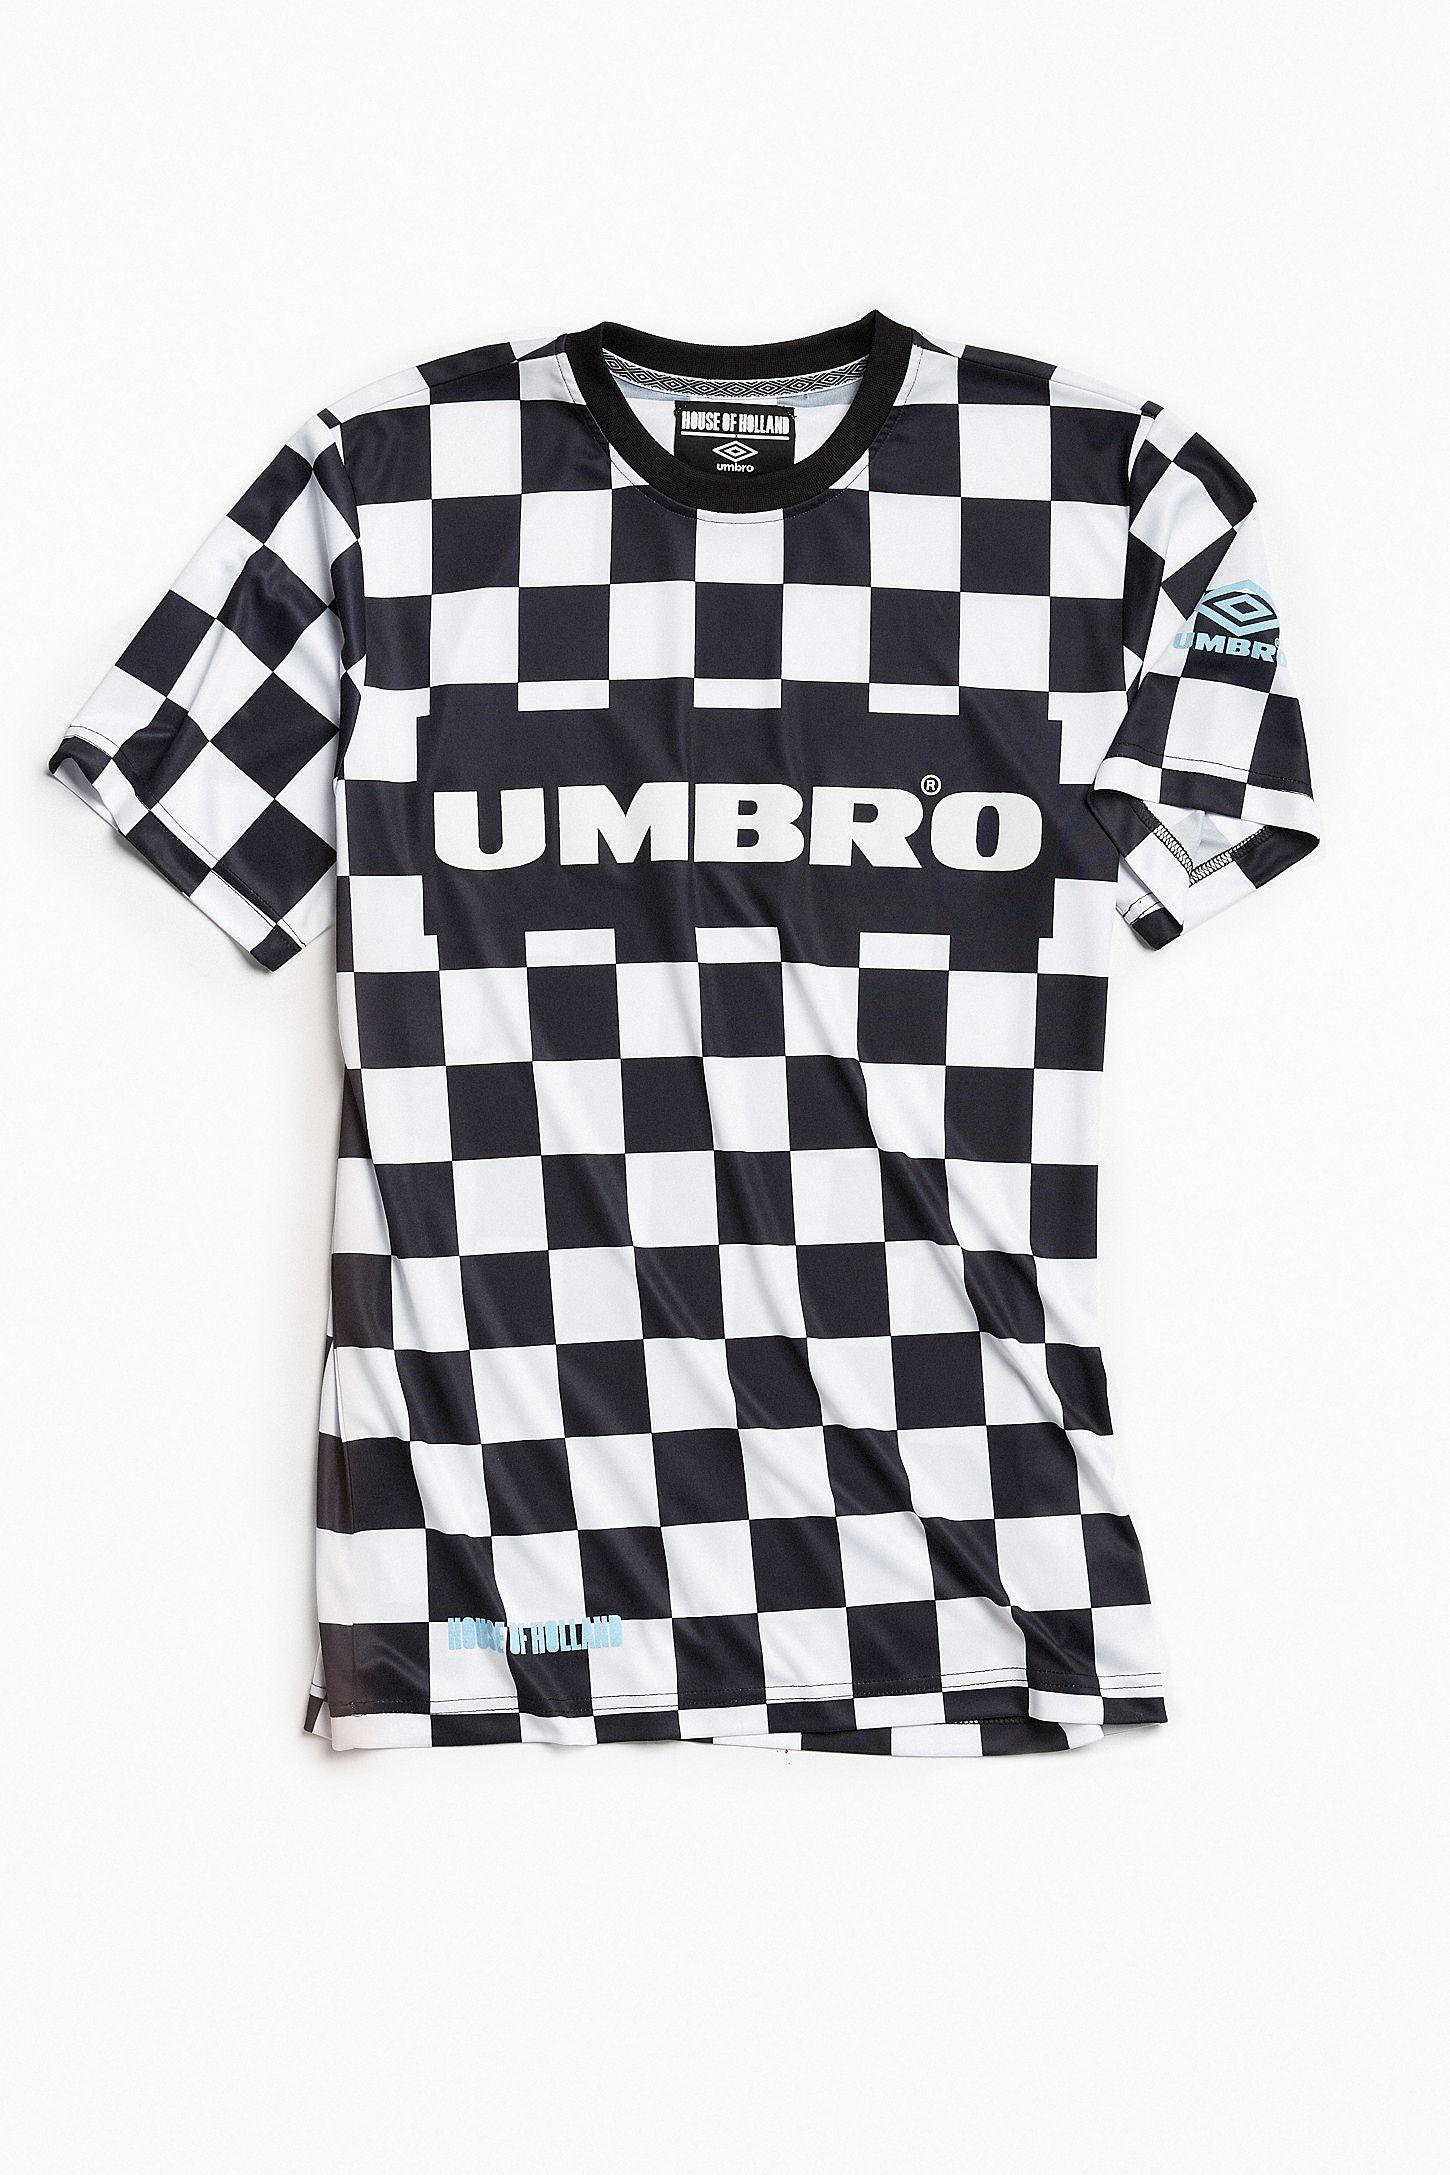 Black and White Checkered Logo - Umbro X House Of Holland Black + White Checkered Football Jersey ...